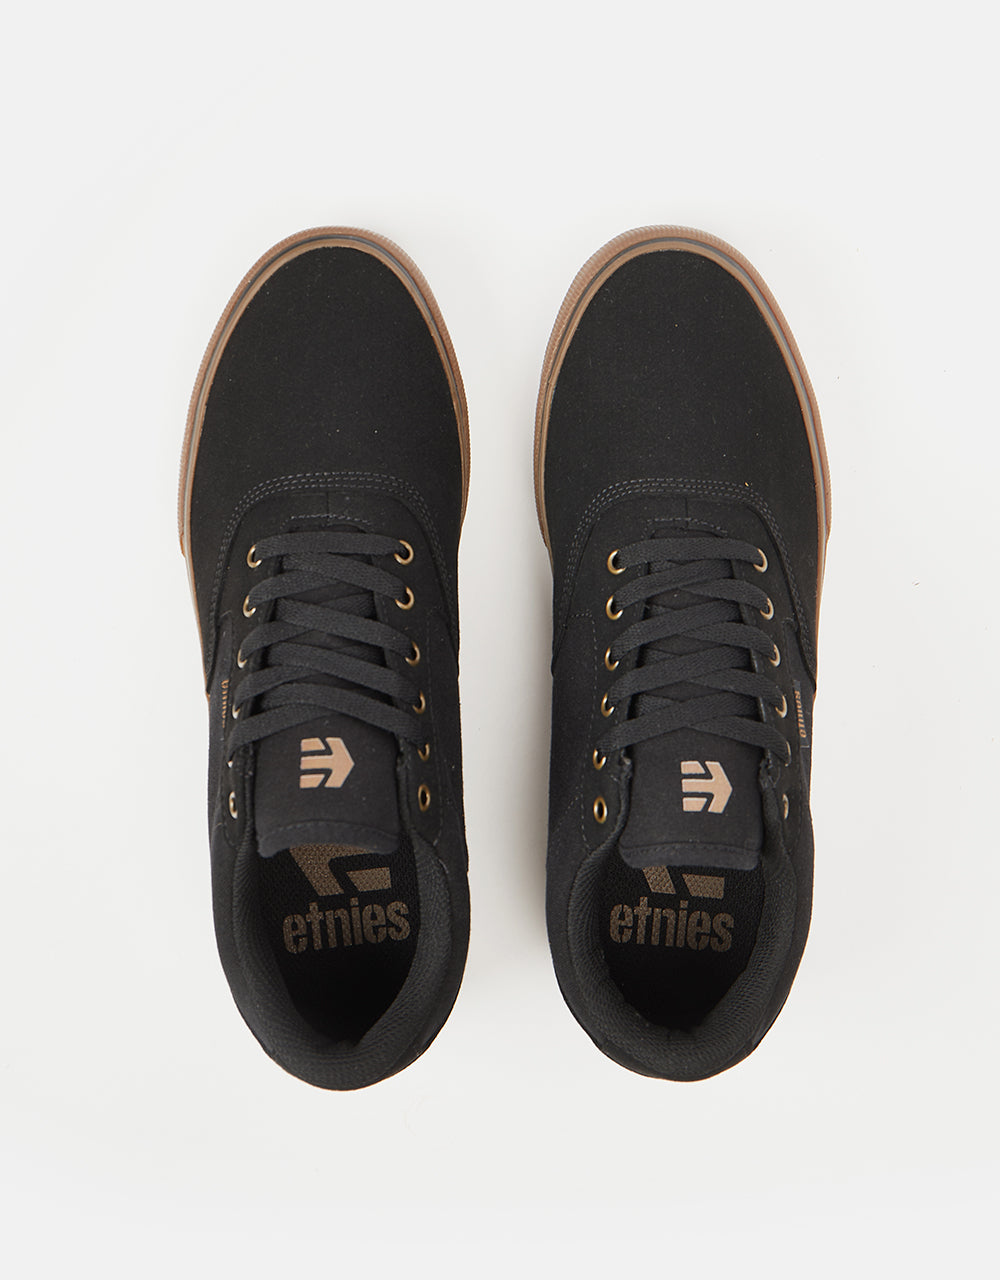 Etnies Blitz Skate Shoes - Black/Gum